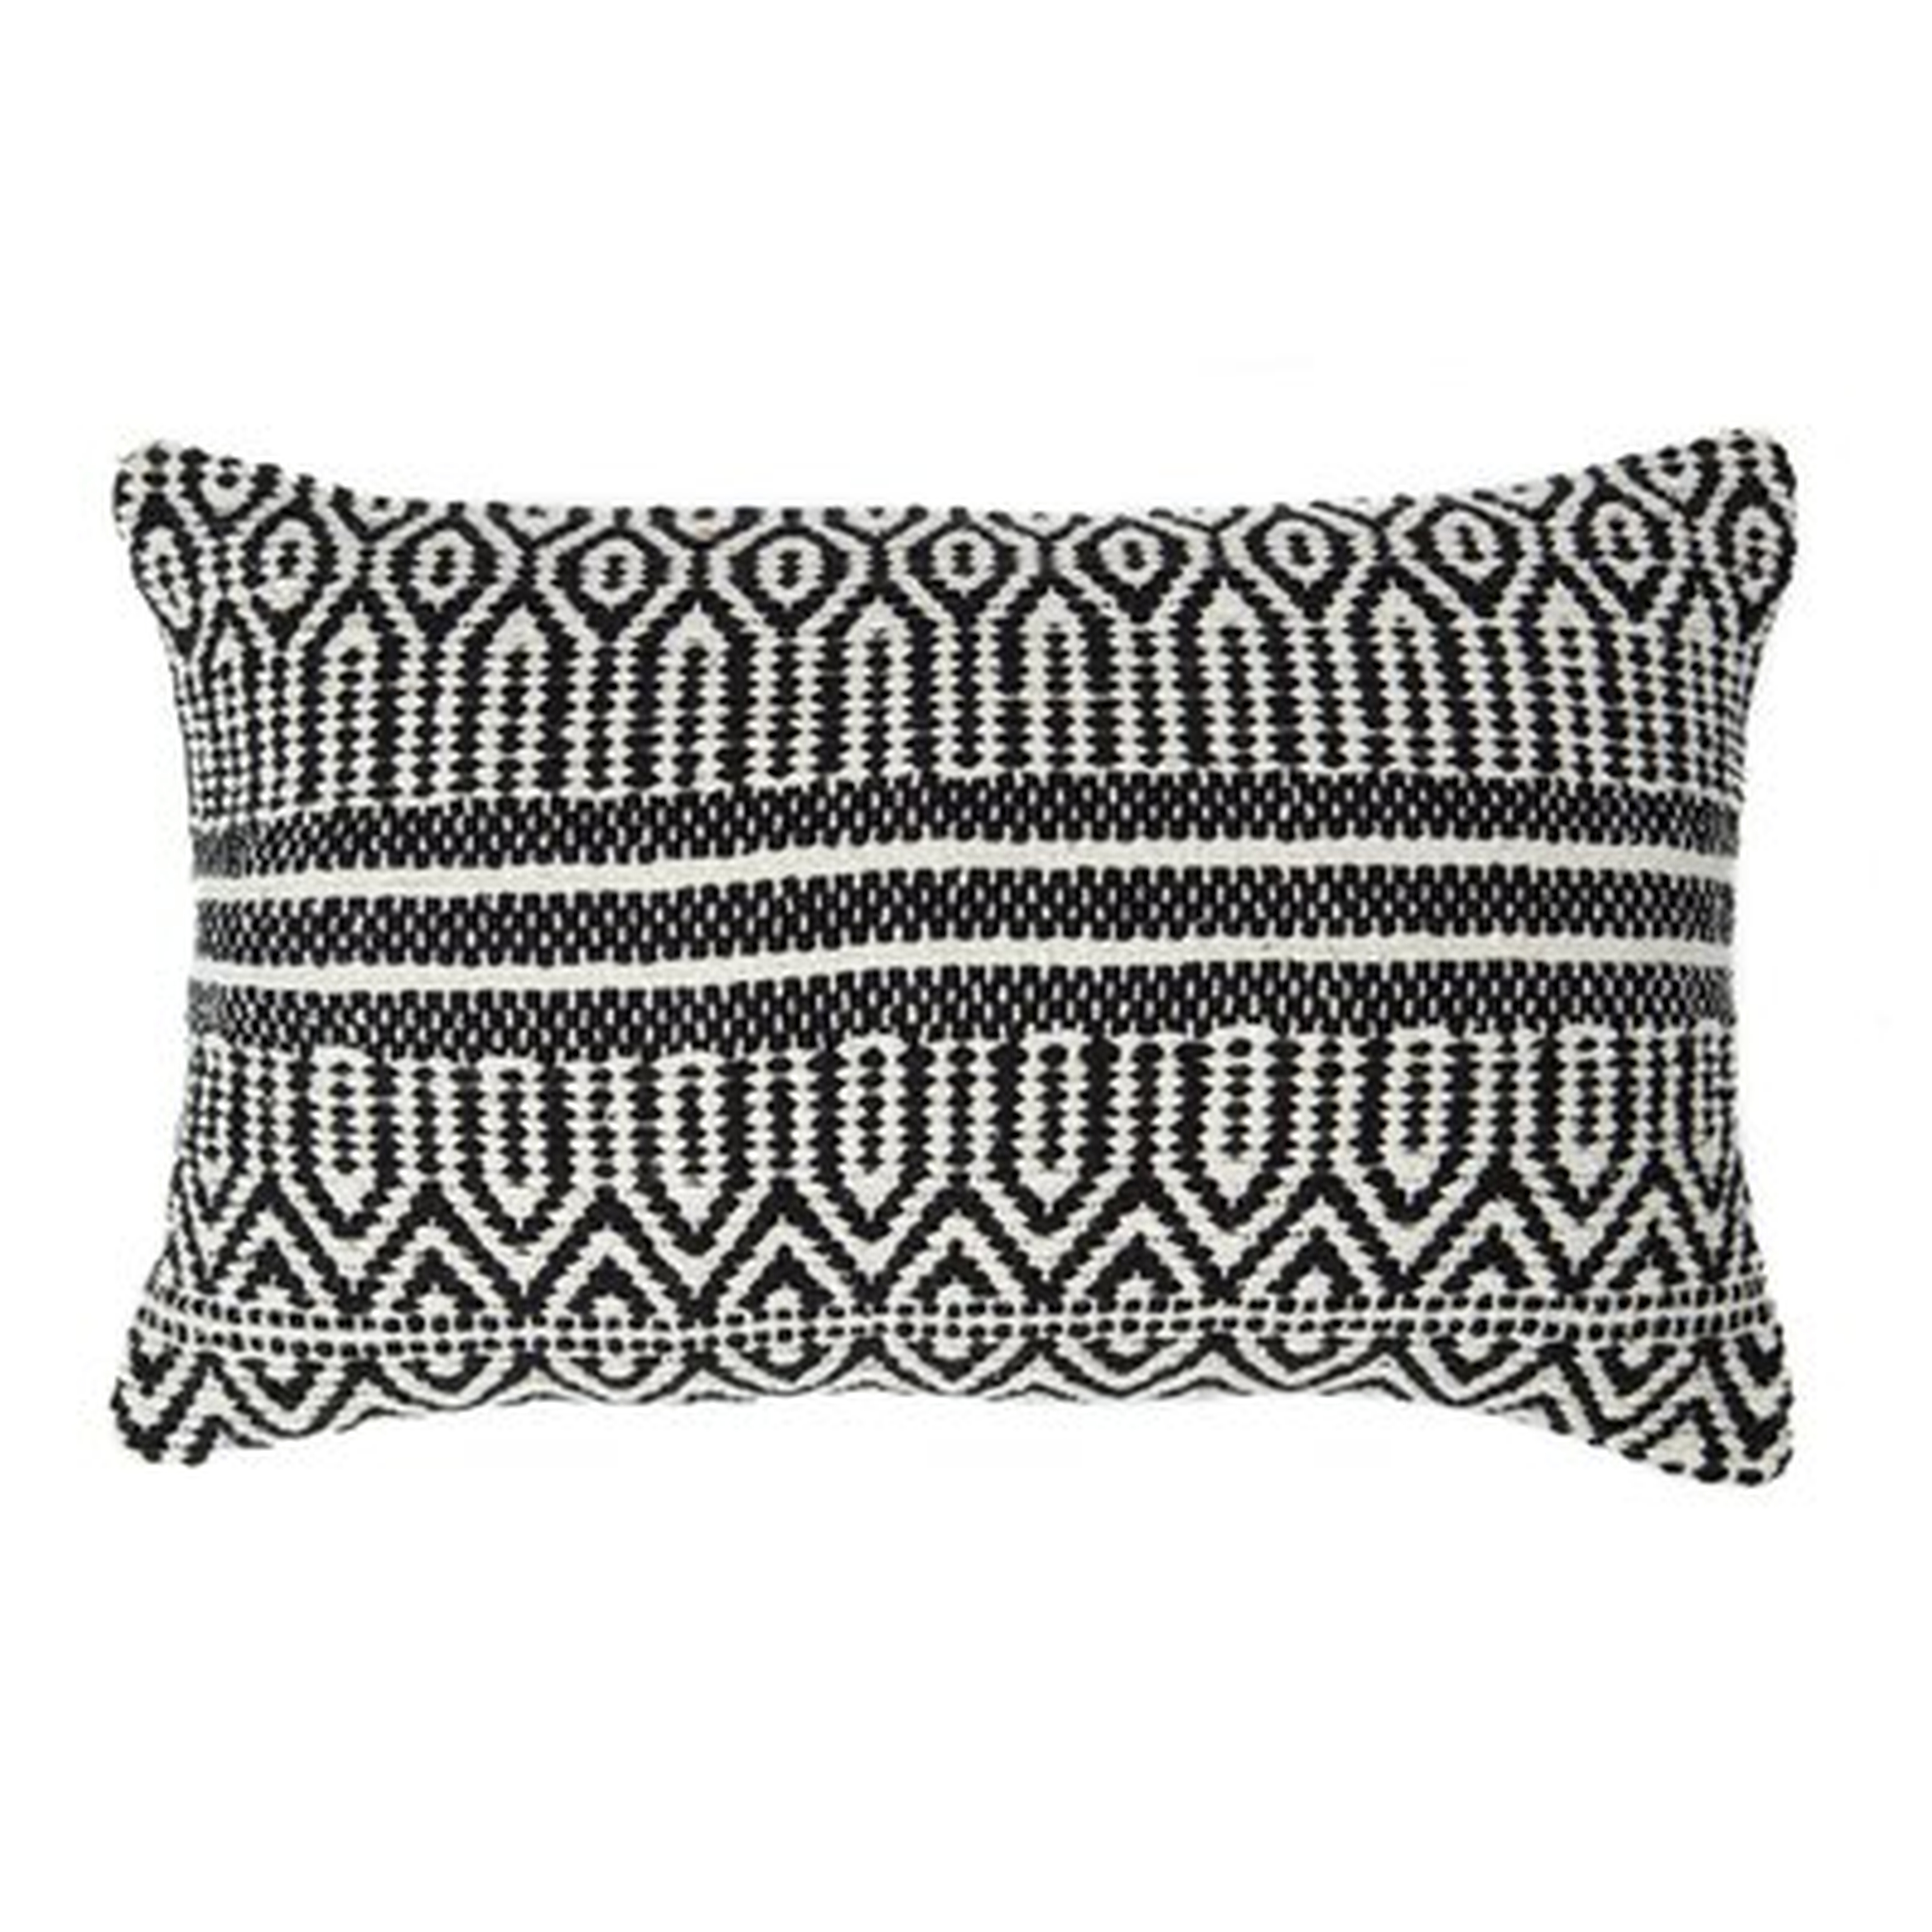 Union Rustic Jacquard Cotton Black And White Natural Stripe Pattern Lumbar Throw Pillow Cover - Wayfair